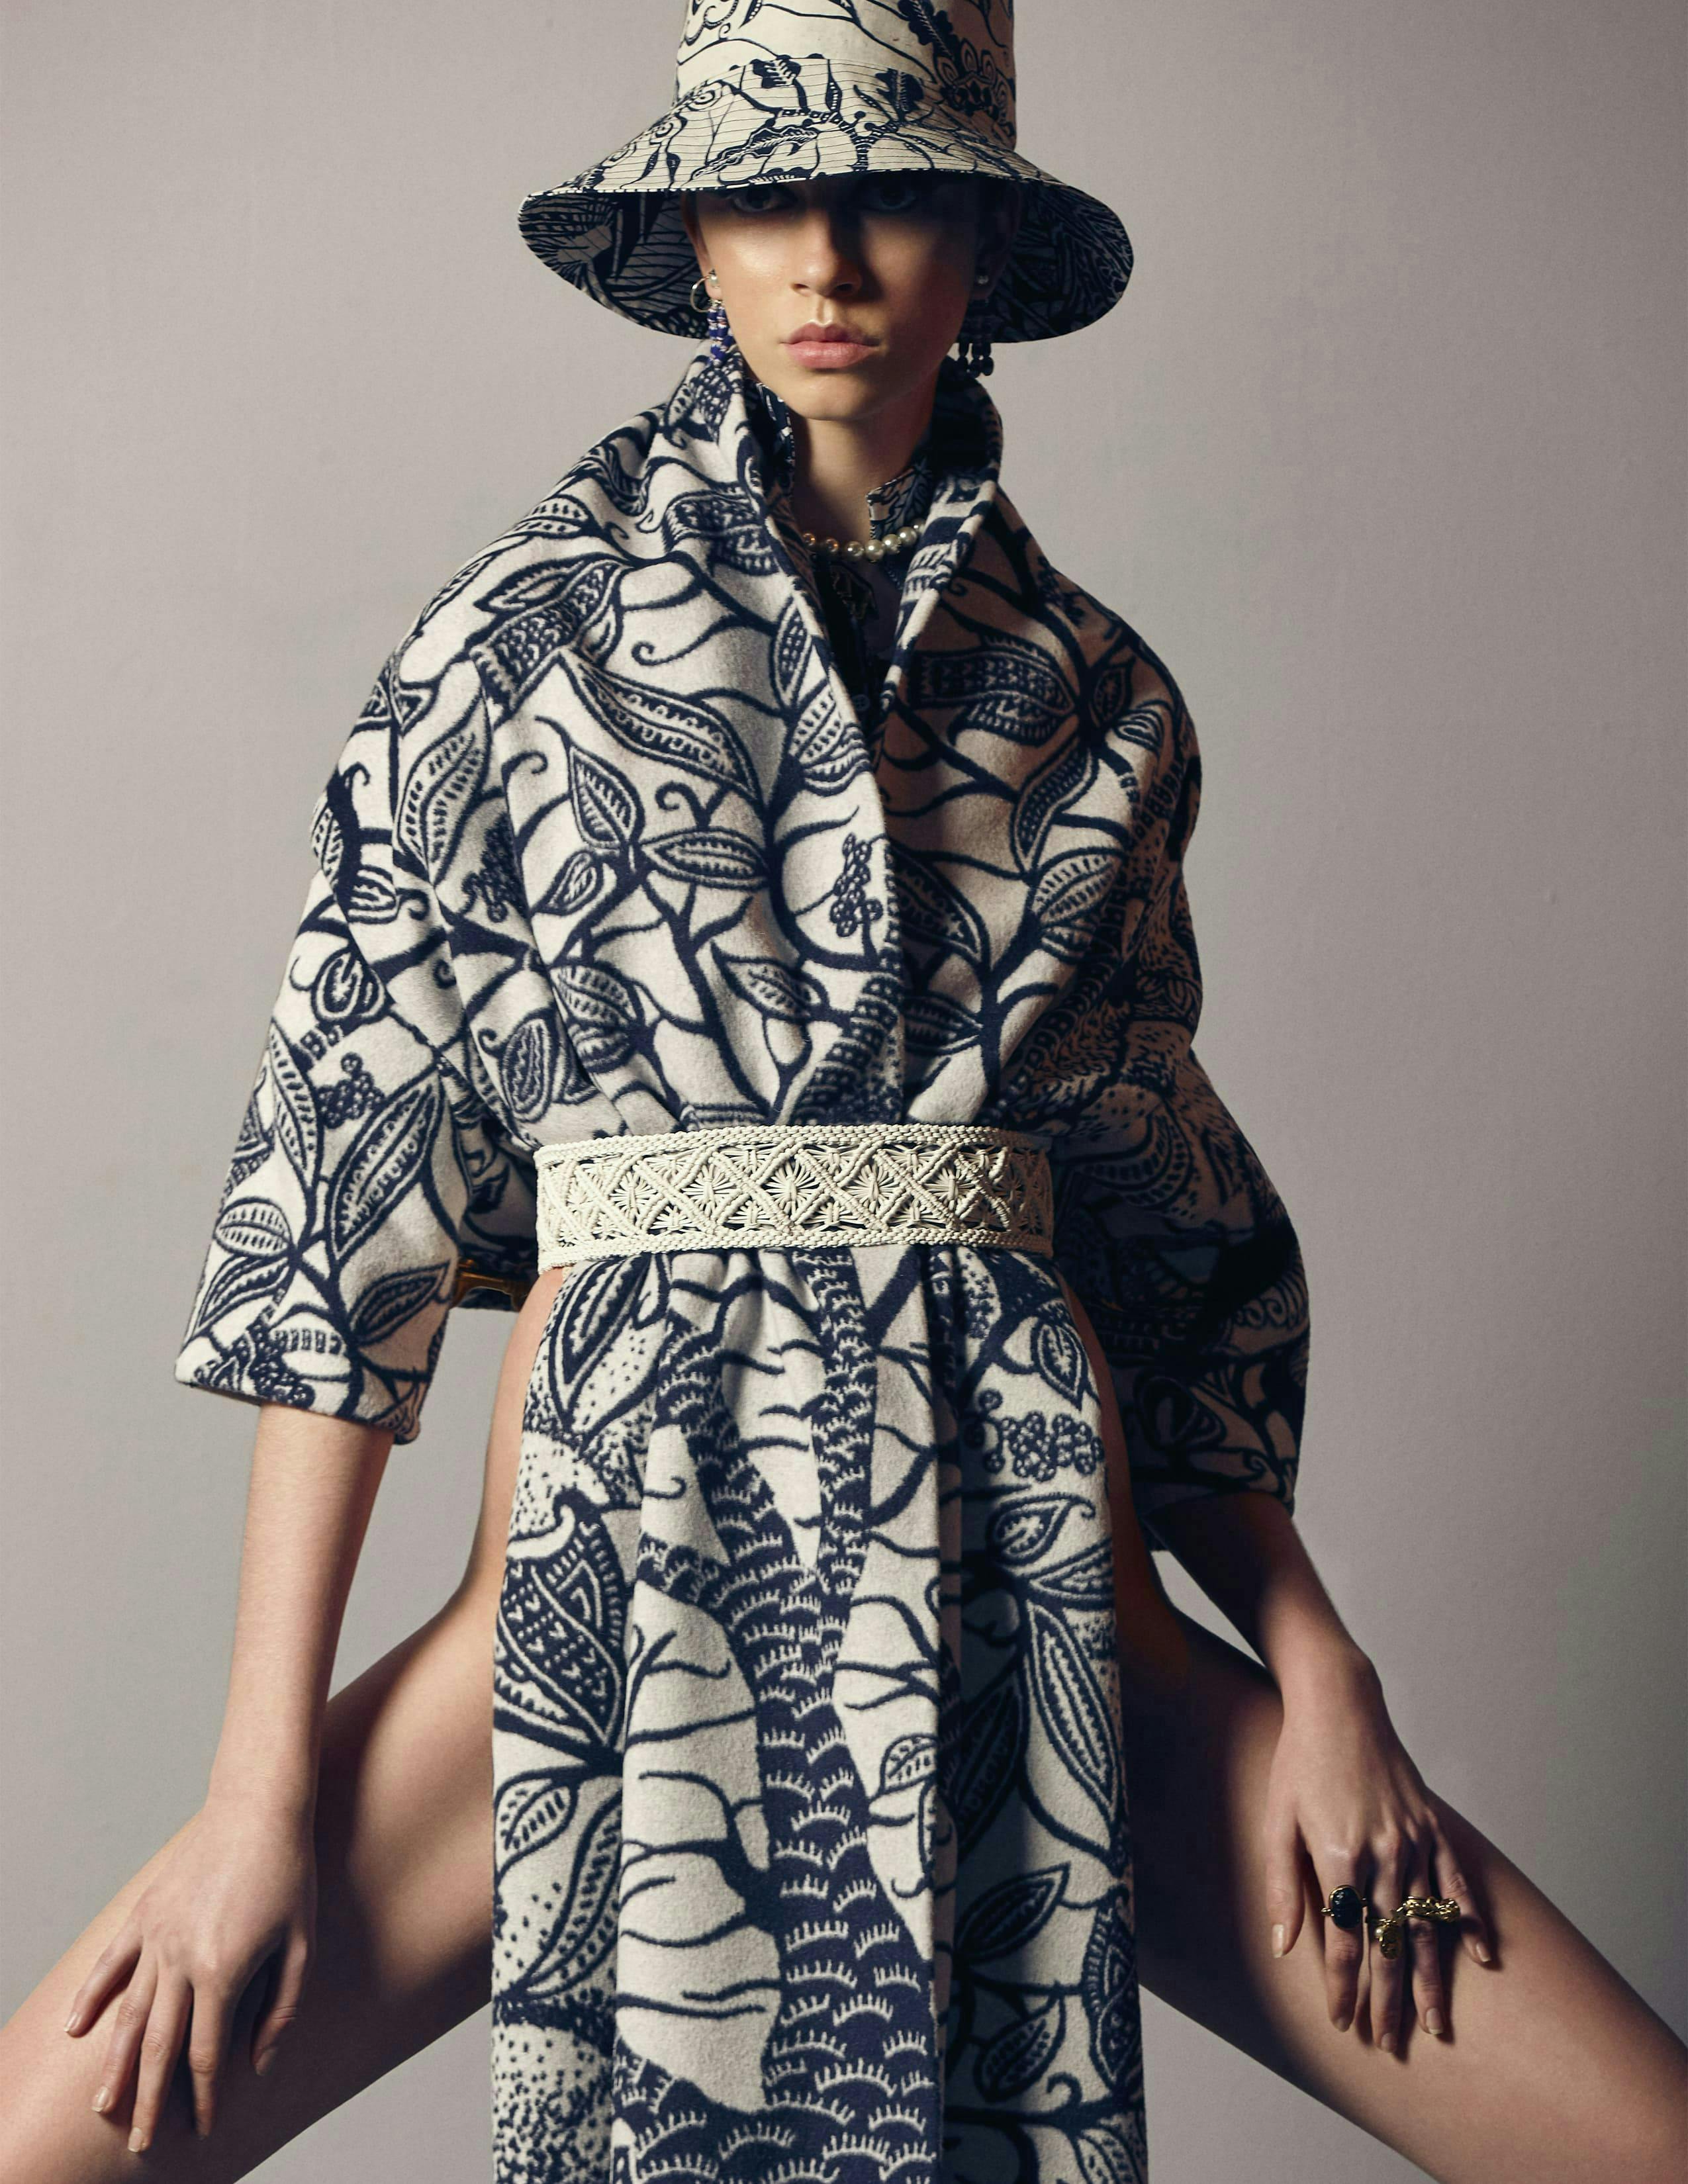 clothing apparel hat robe fashion person human dress